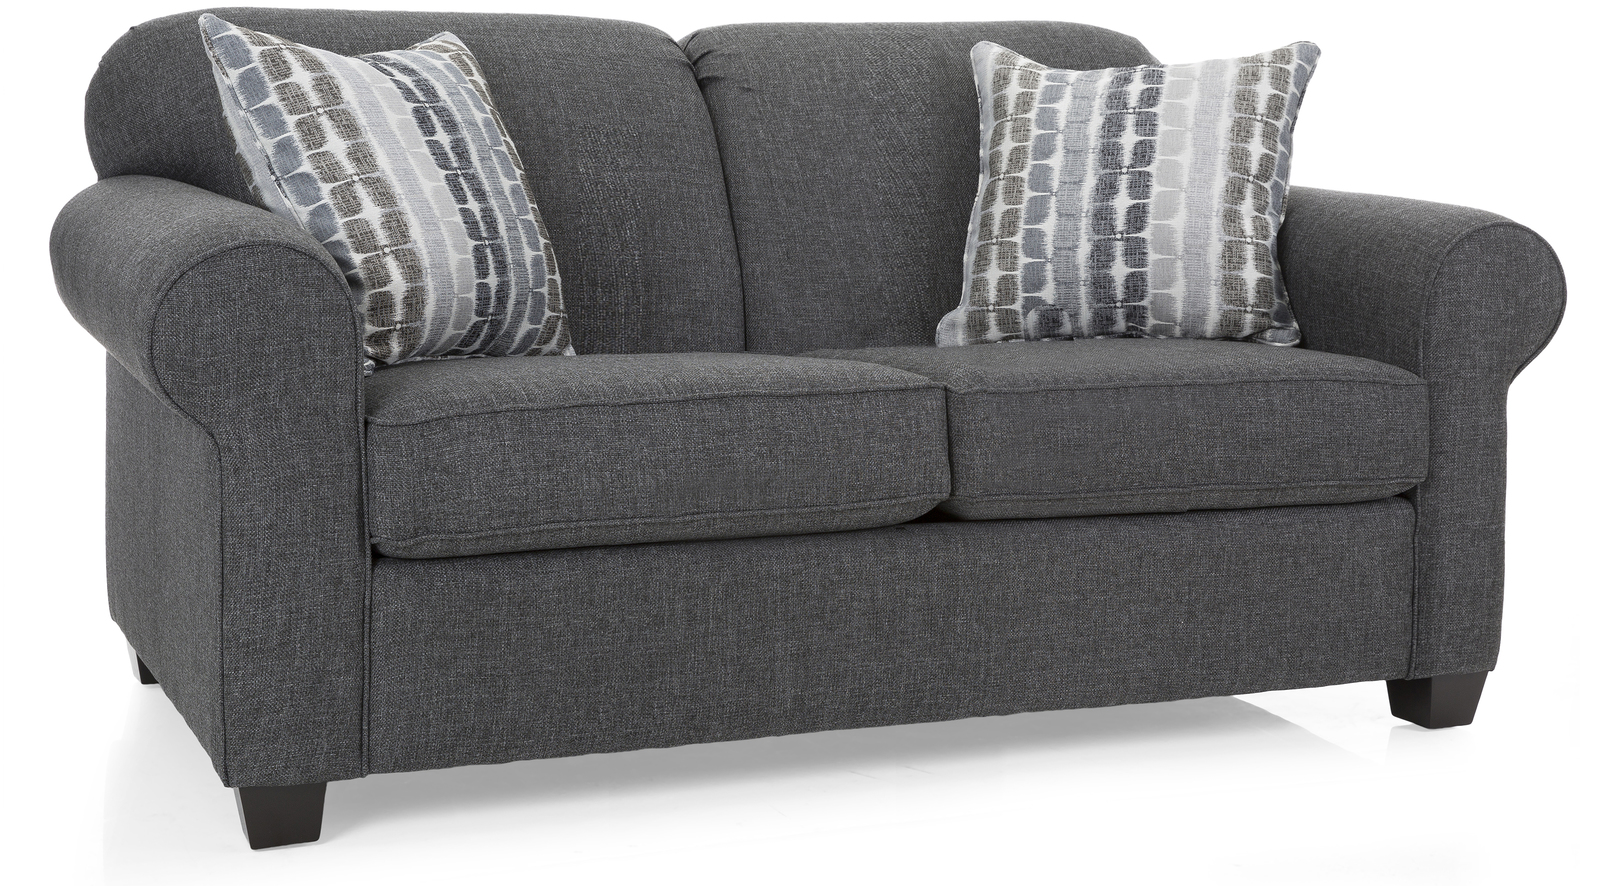 Decor-Rest 3443 LTD181097 3443C SWIVEL CHAIR | Upper Room Home Furnishings  | Upholstered Chairs